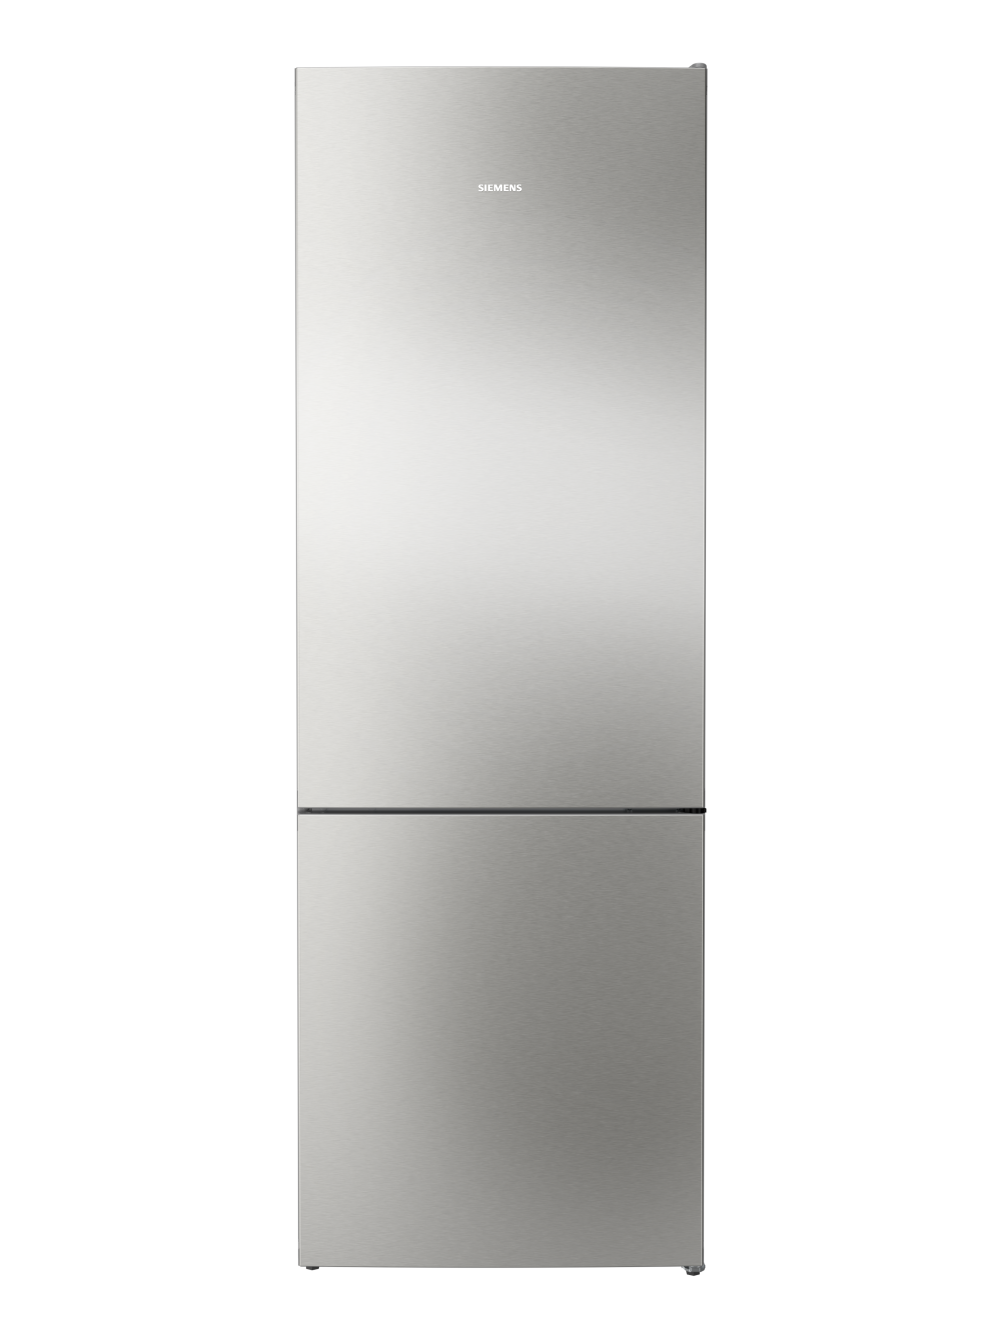 Siemens KG49N2IDF iQ300 Freestanding Fridge Freezer featured image